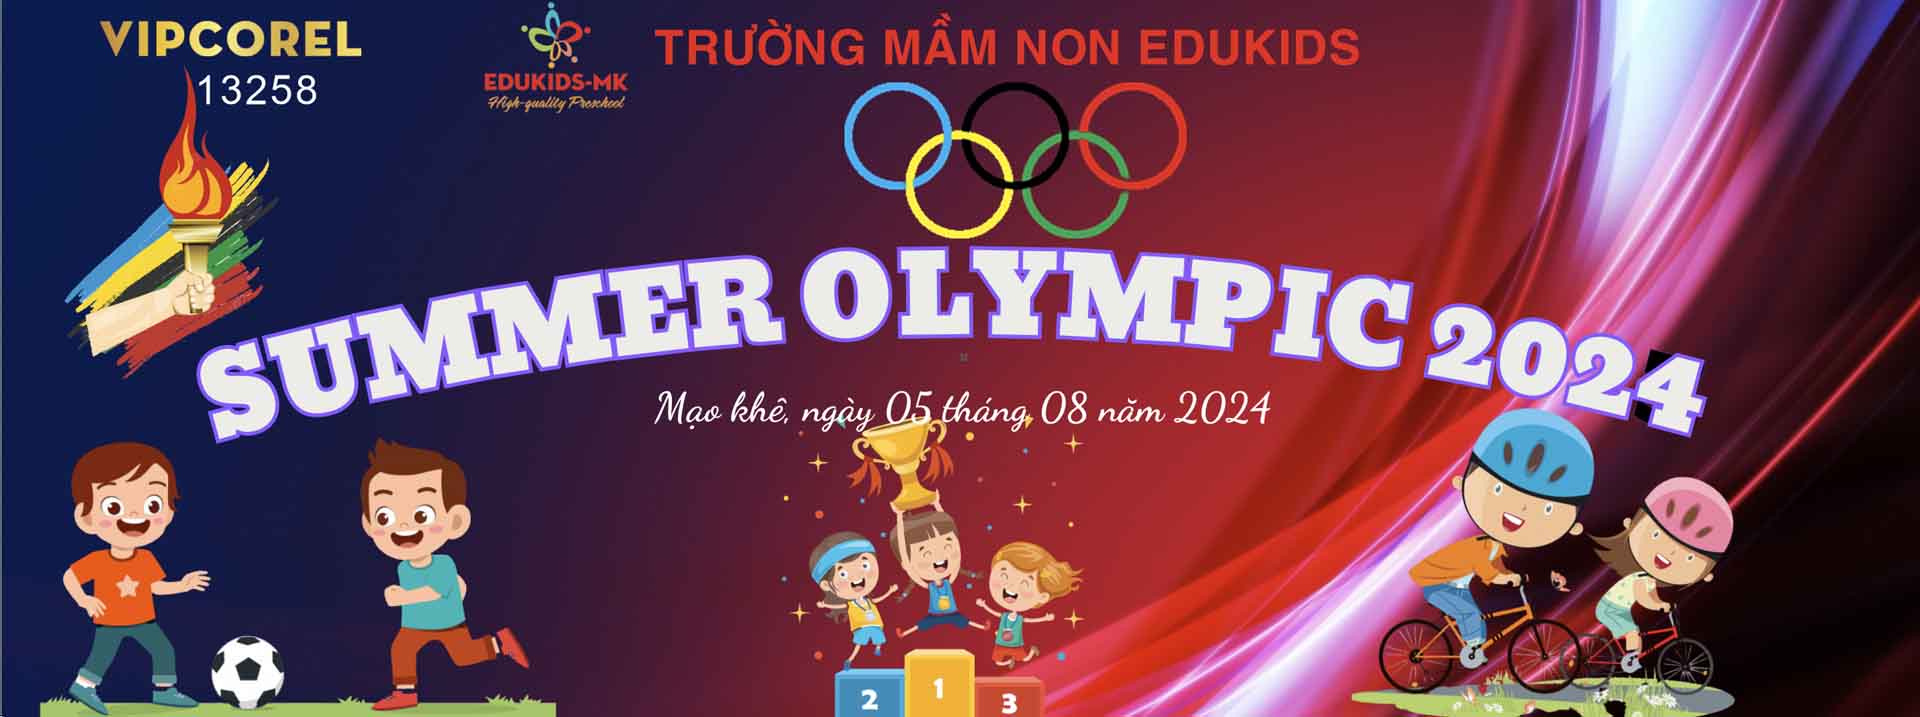 summer olympic 2024.jpg